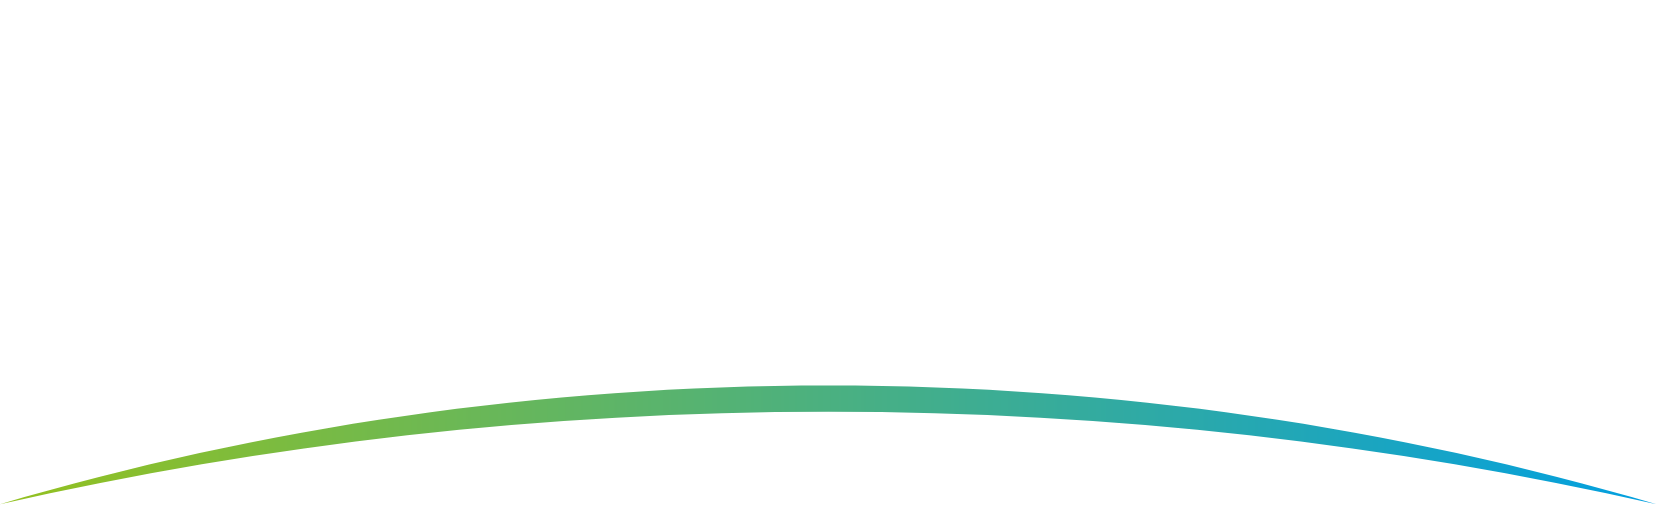 SeaWorld Entertainment logo large for dark backgrounds (transparent PNG)